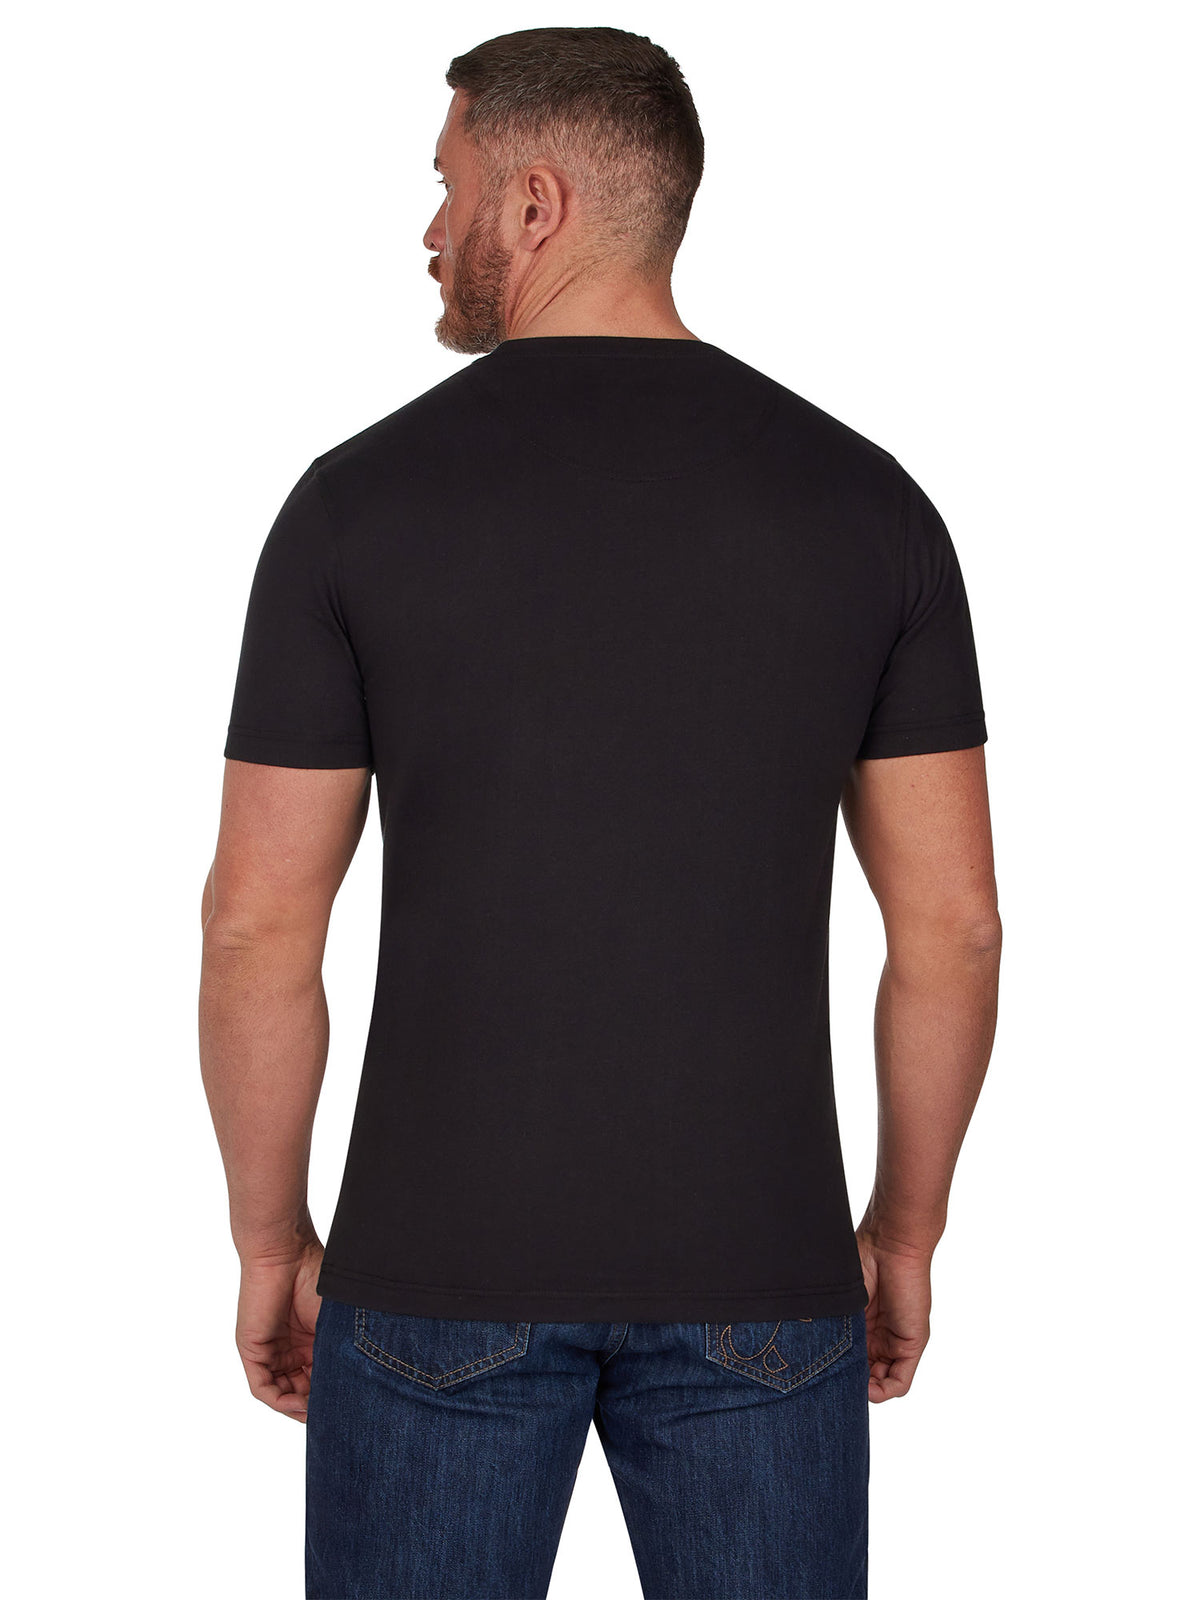 Woven Patch T-Shirt - Black